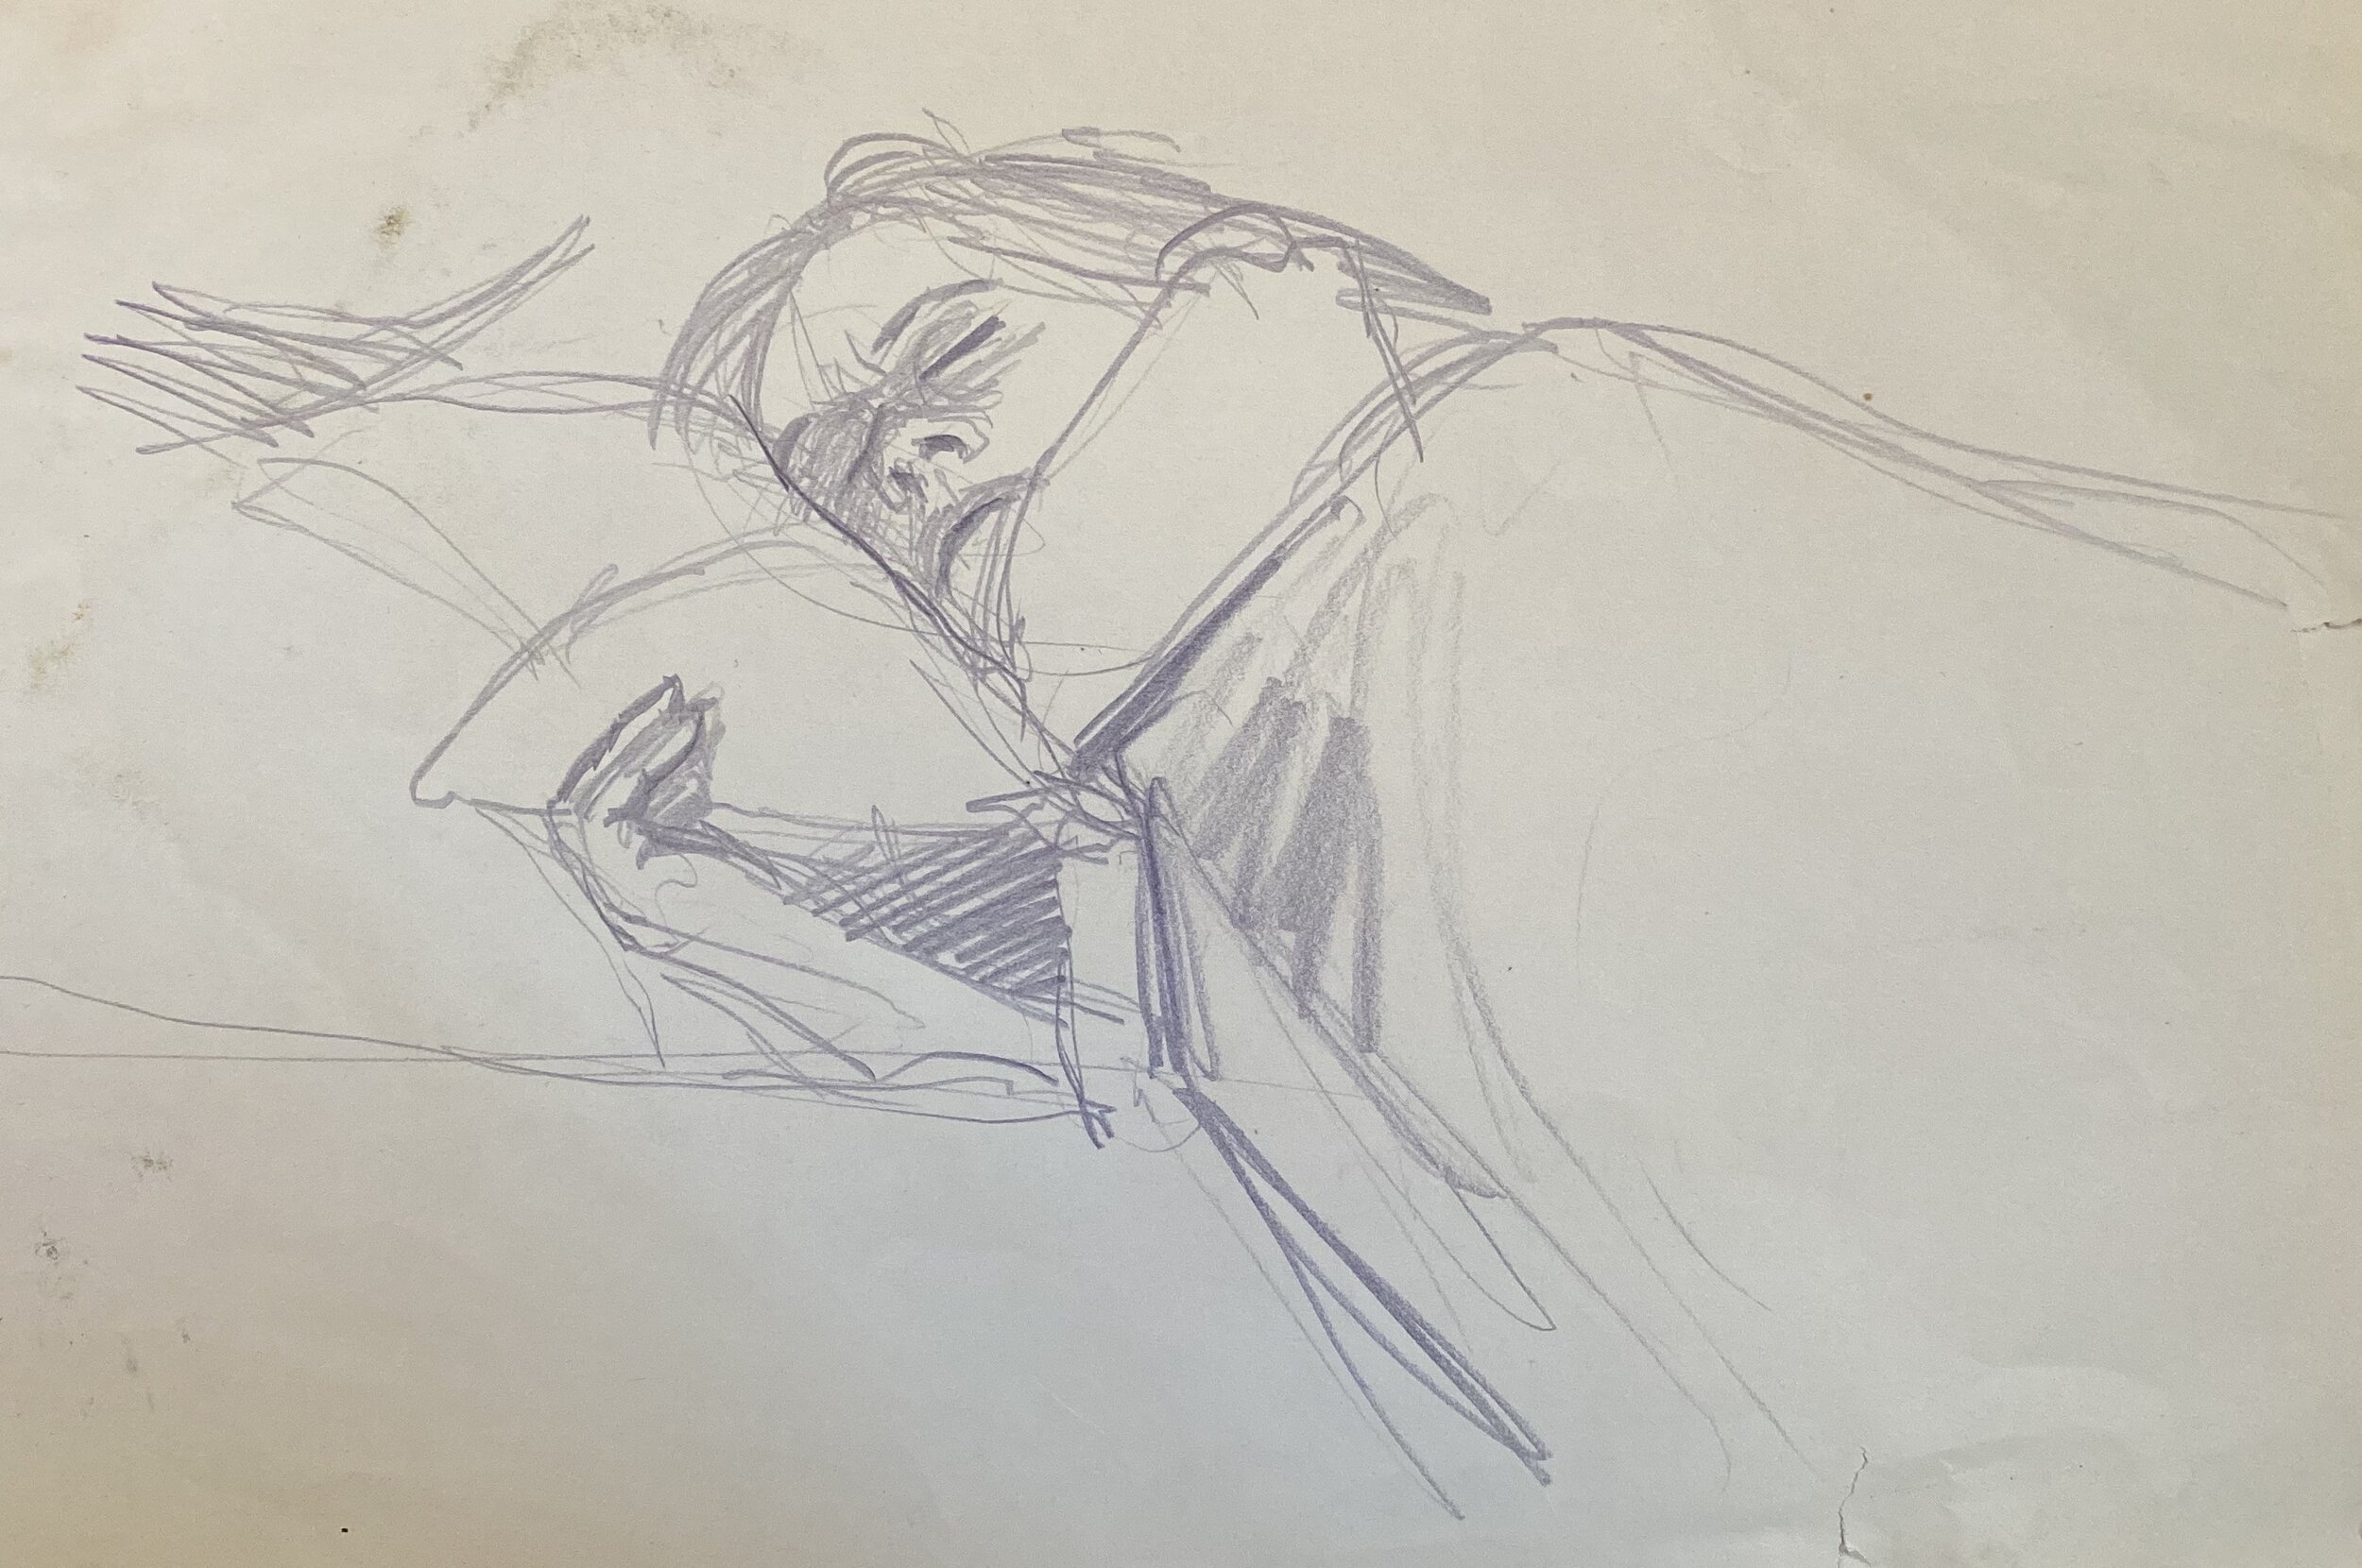   Description:   Girl sleeping   Medium:   Pencil on paper   Dimensions:    H: 7 in  W: 11 in 